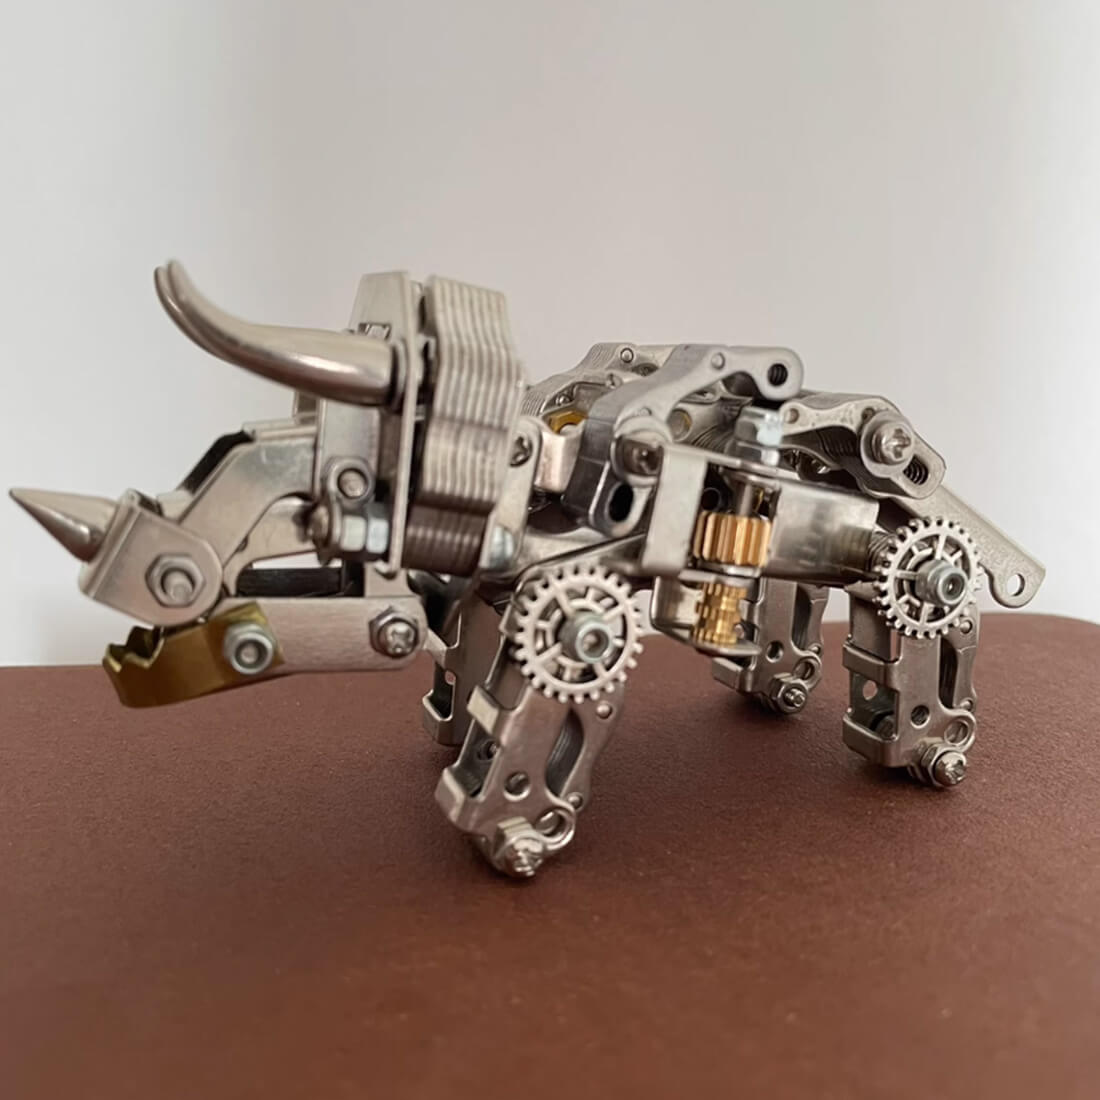 Small Triceratops 3D DIY Metal Model Kits